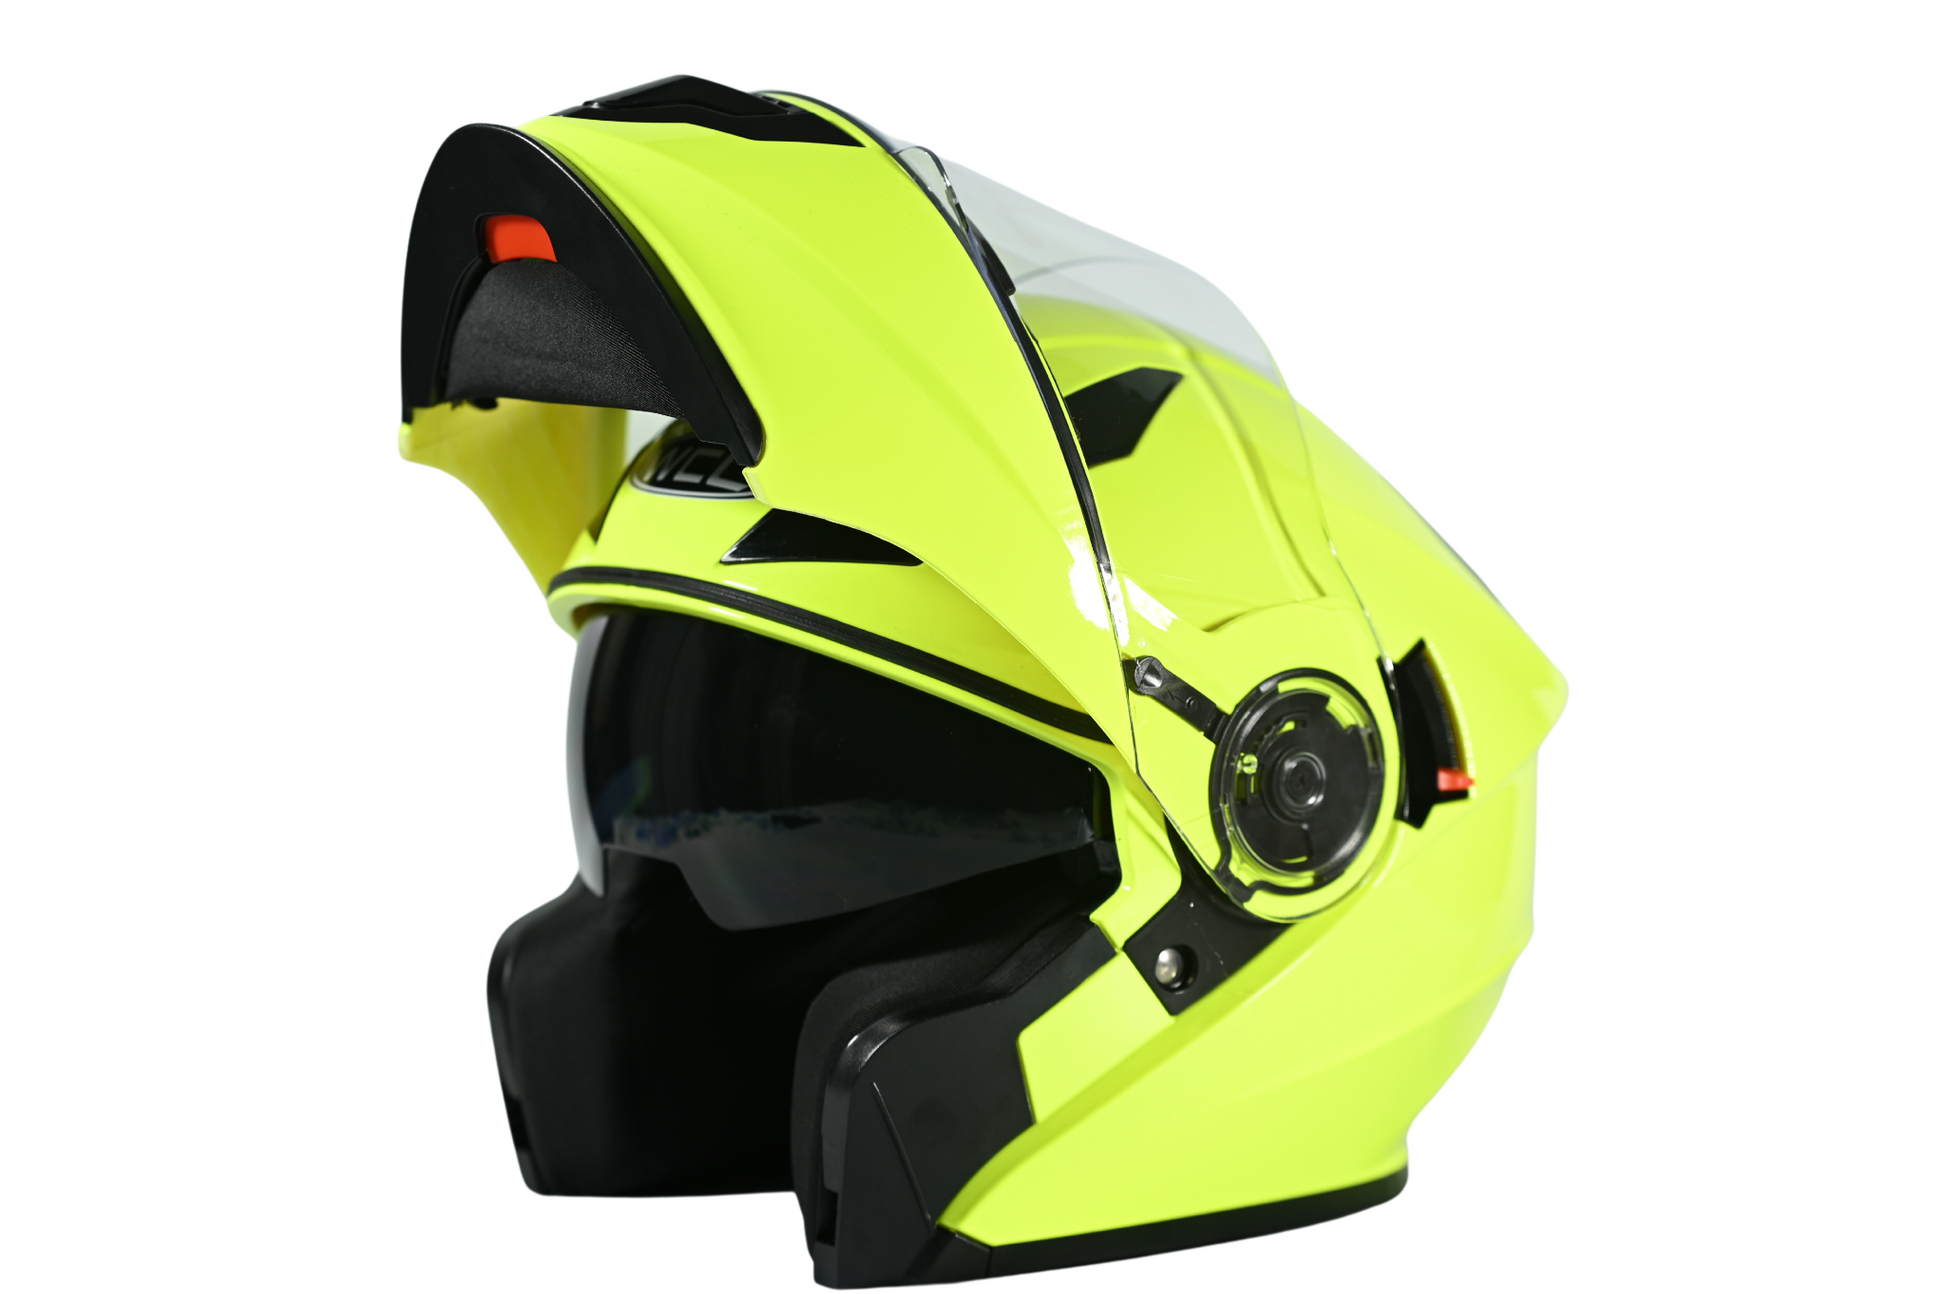 Modelo FF325 Strobe - LS2 Helmets Costa Rica